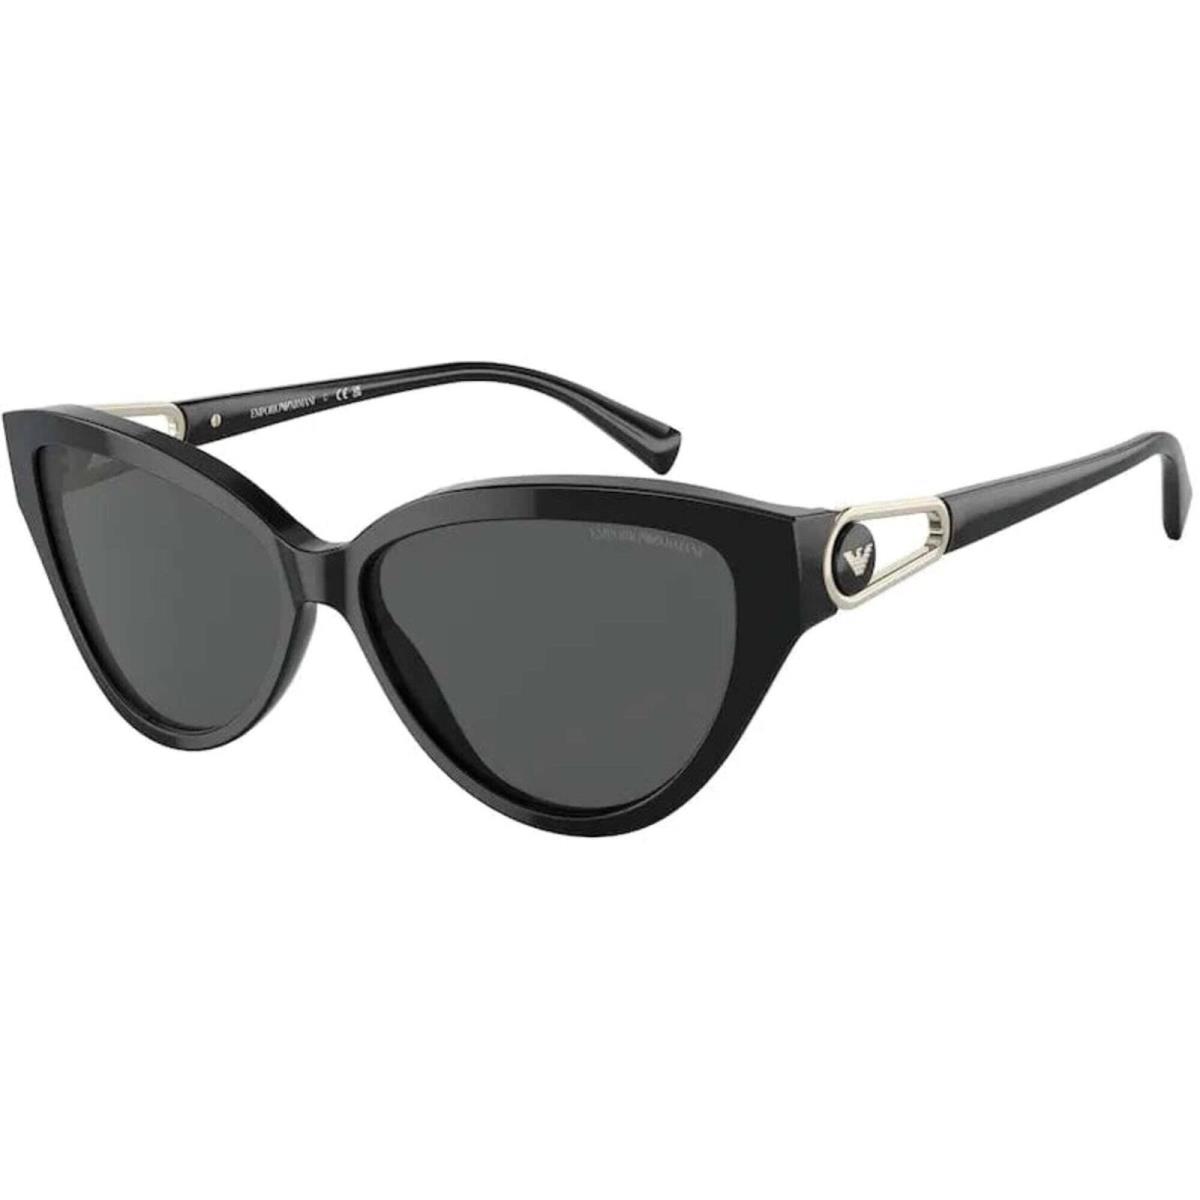 Emporio Armani Women`s Sunglasses Shiny Black Plastic Cat Eye Frame 4192F 501787